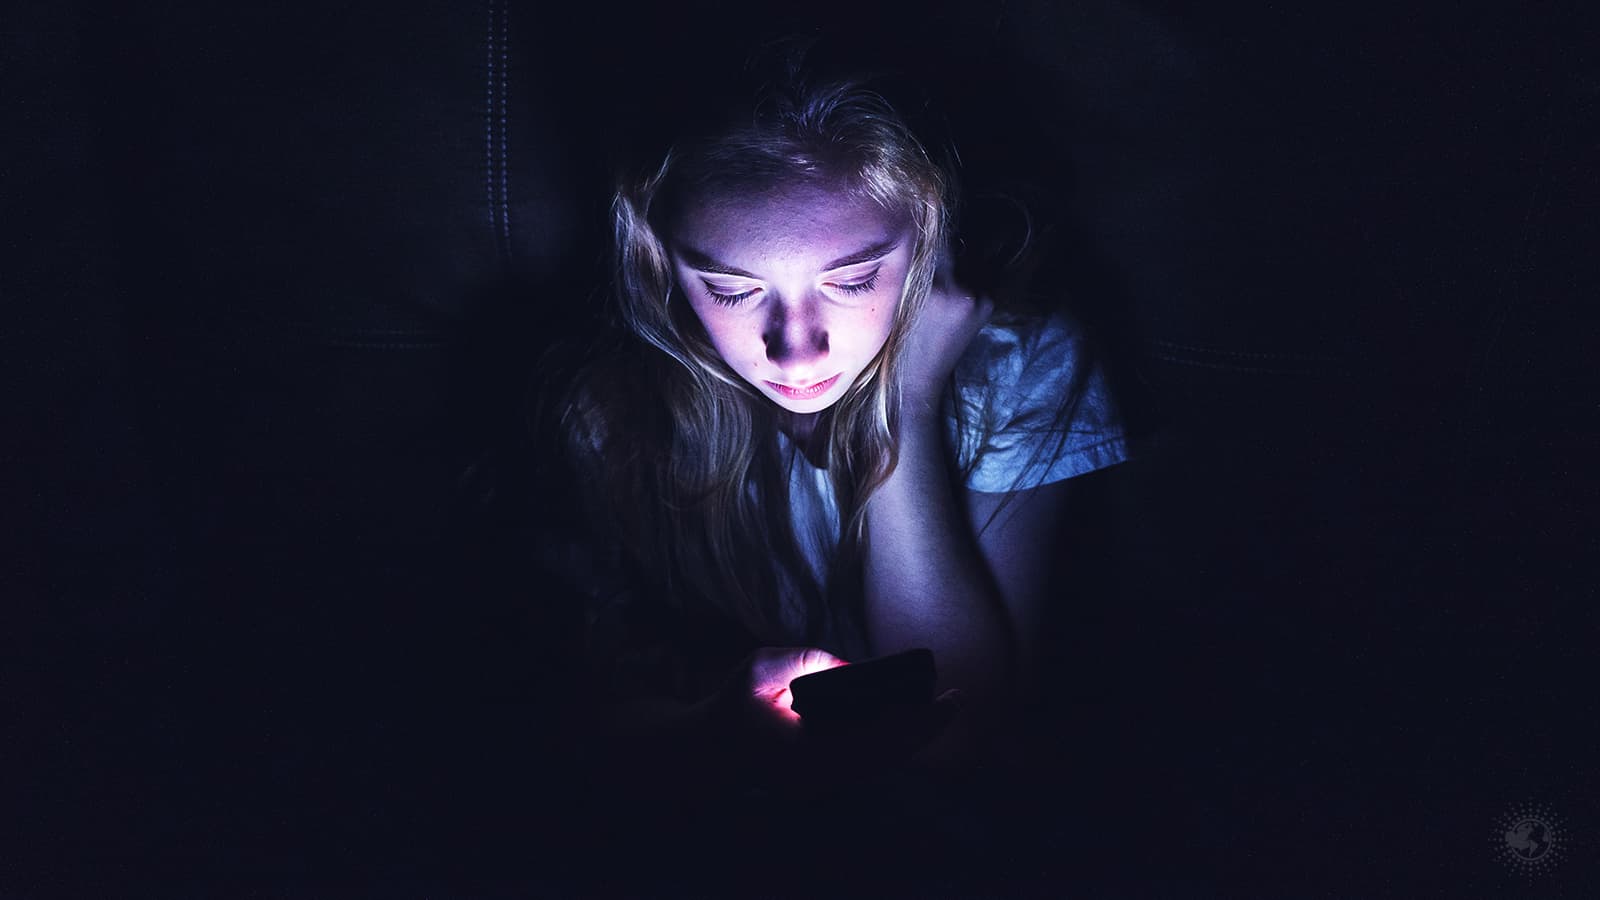 Scientists Link Social Media Addiction to Depression